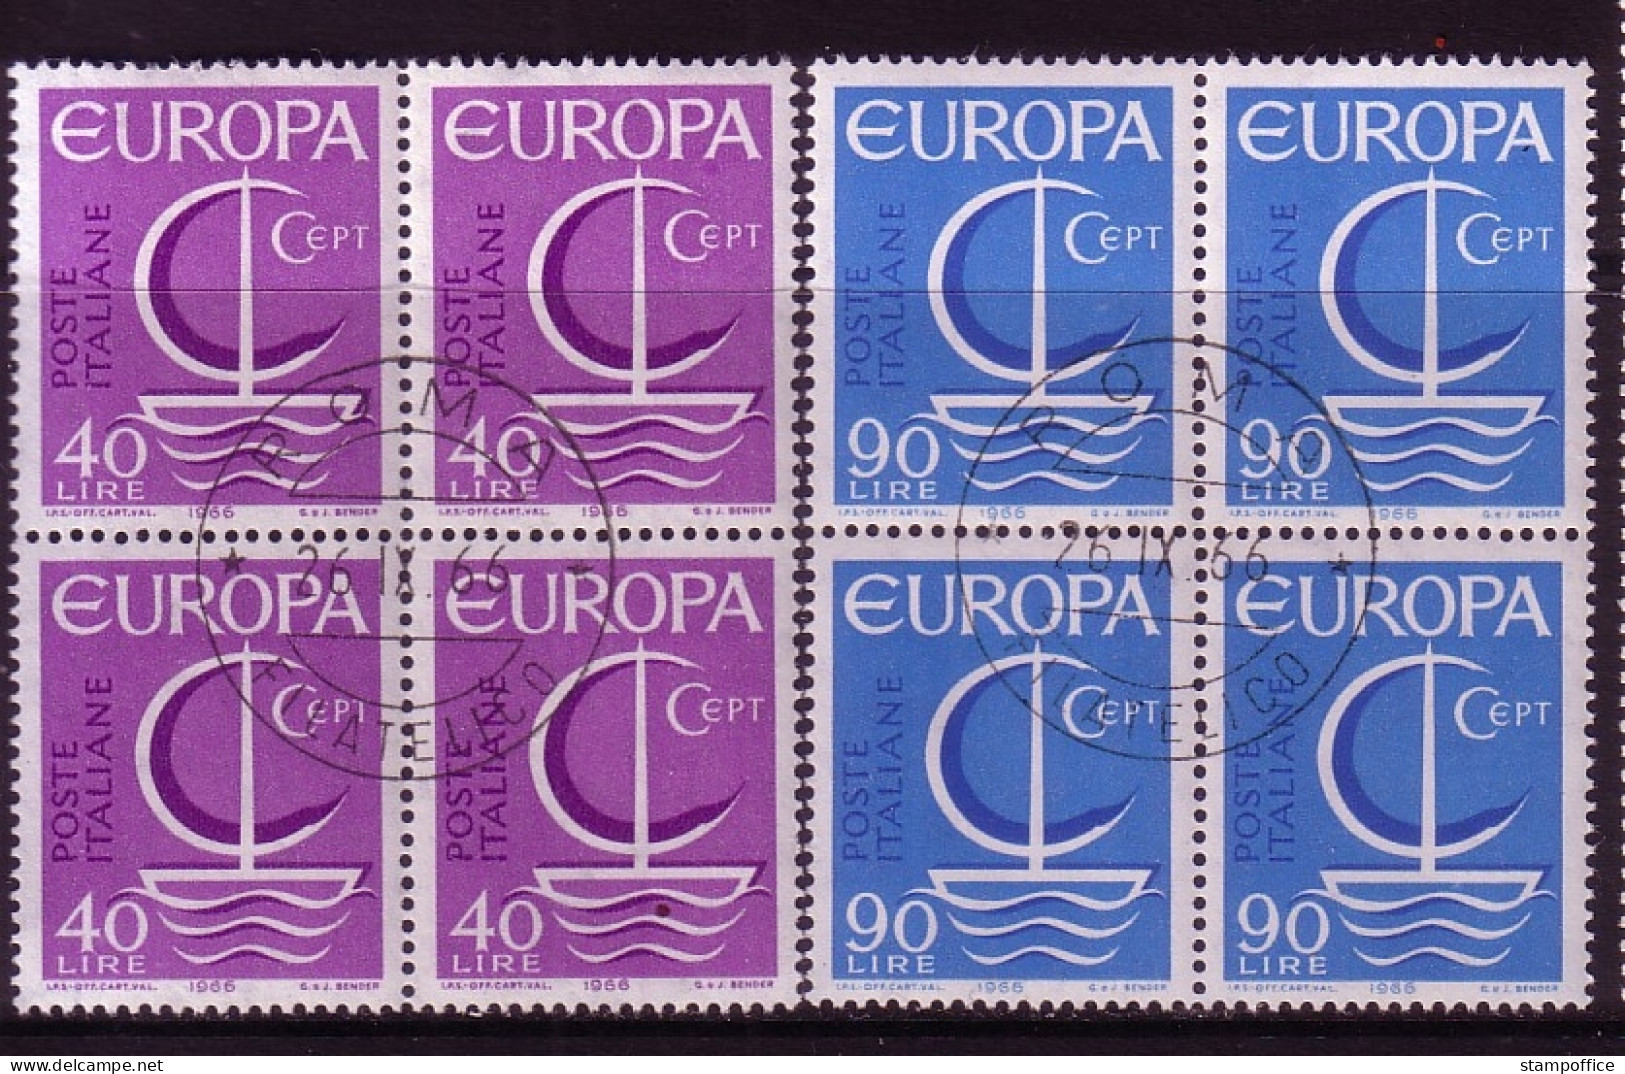 ITALIEN MI-NR. 1215-1216 GESTEMPELT(USED) 4er BLOCK EUROPA 1966 SEGEL - 1966